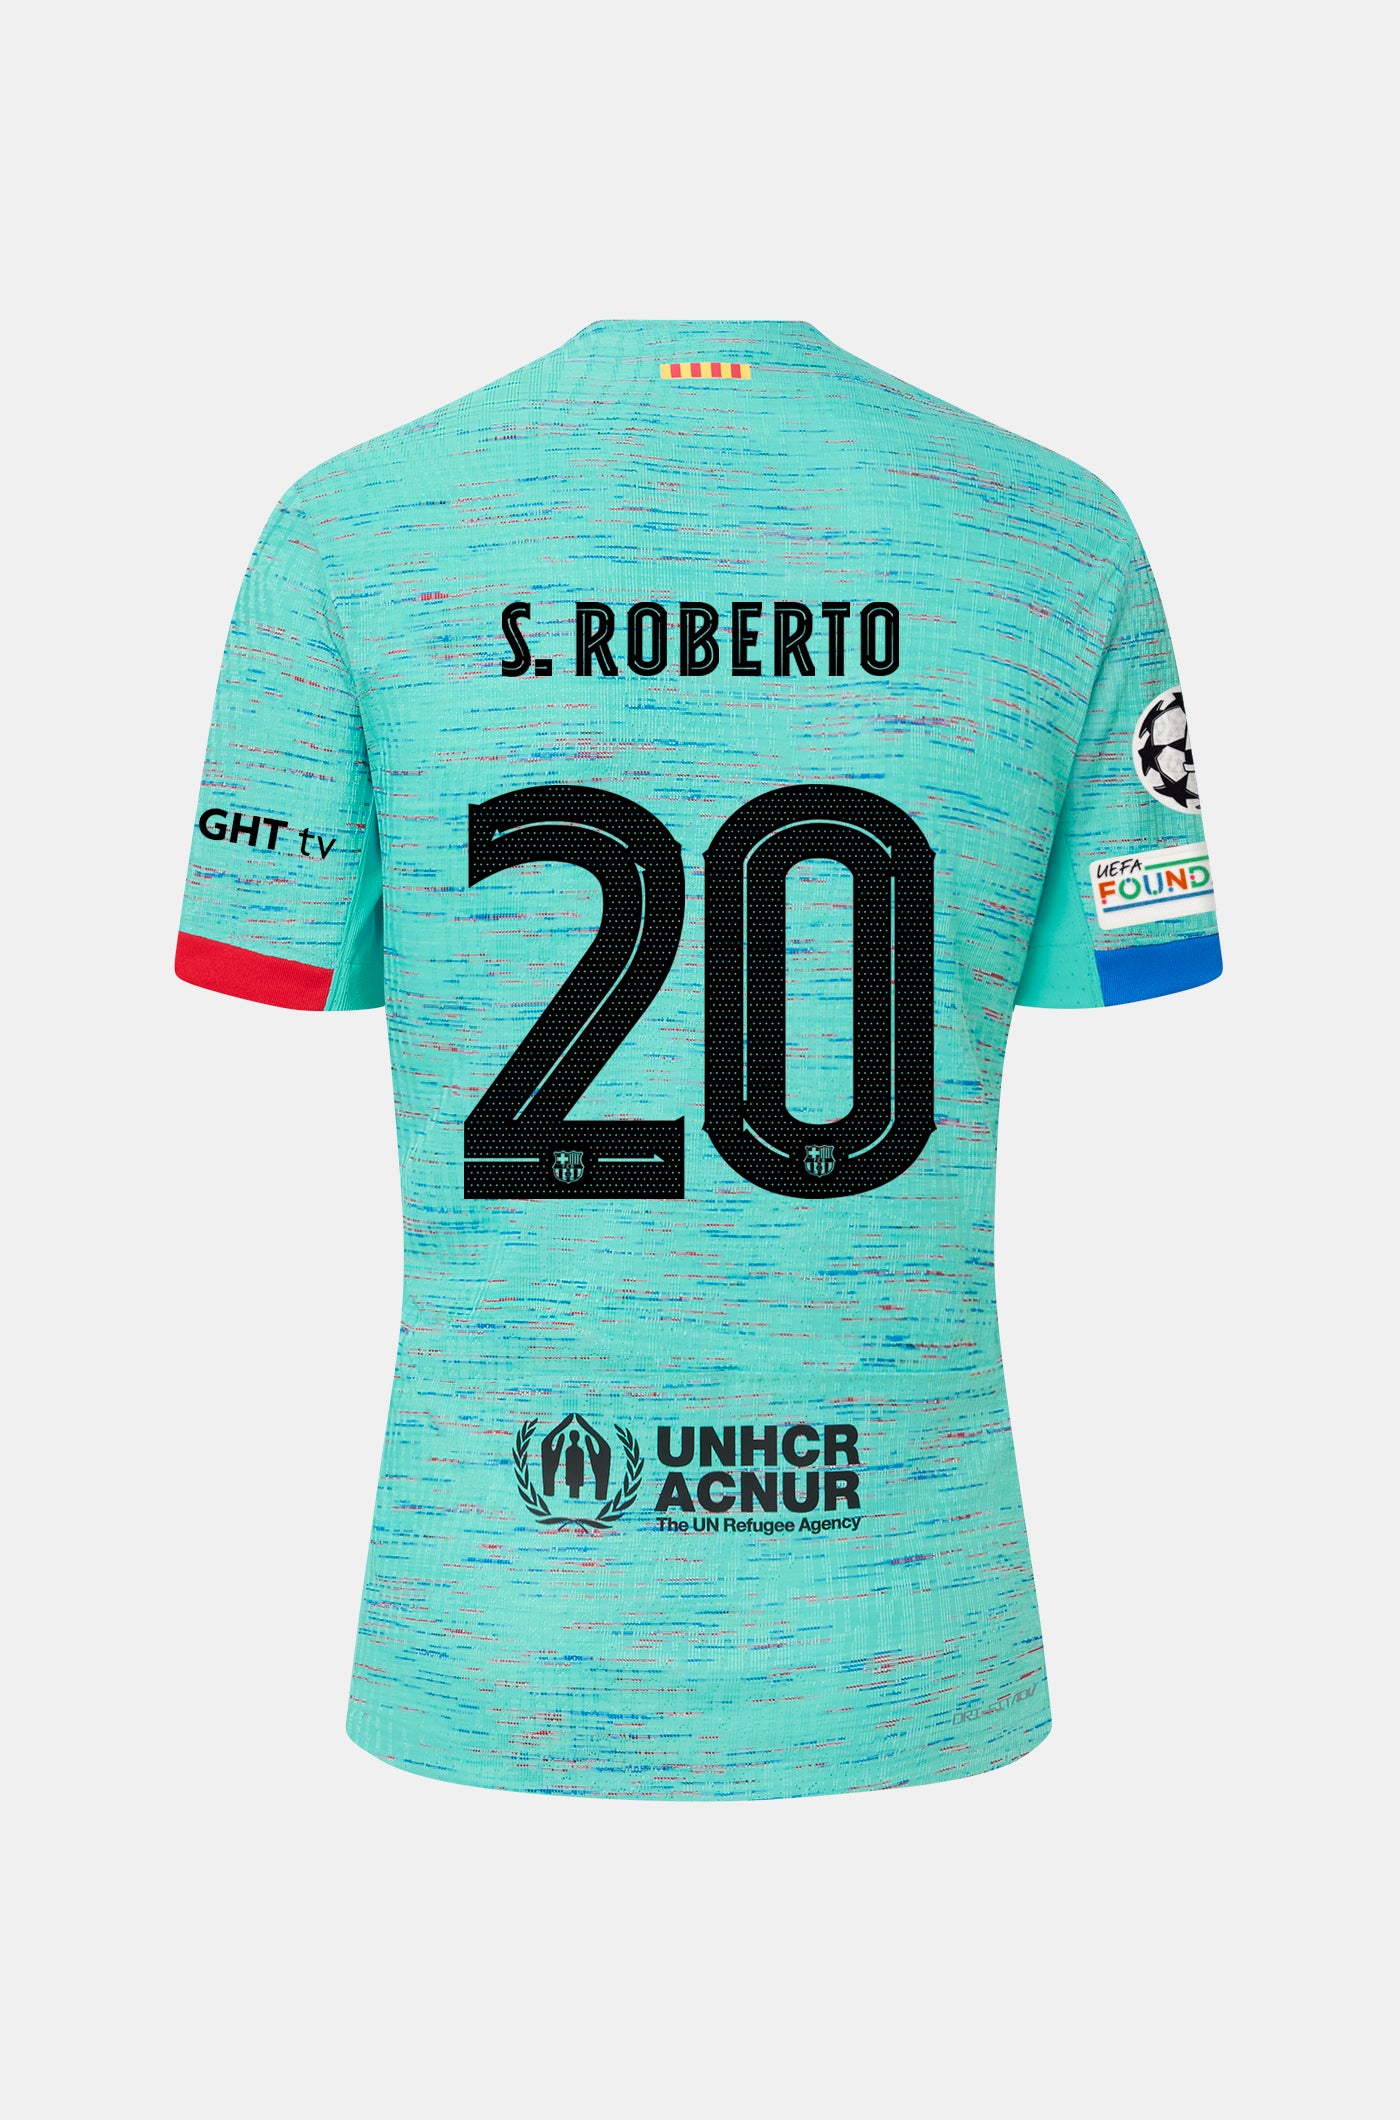 UCL FC Barcelona third shirt 23/24 Player’s Edition - S. ROBERTO